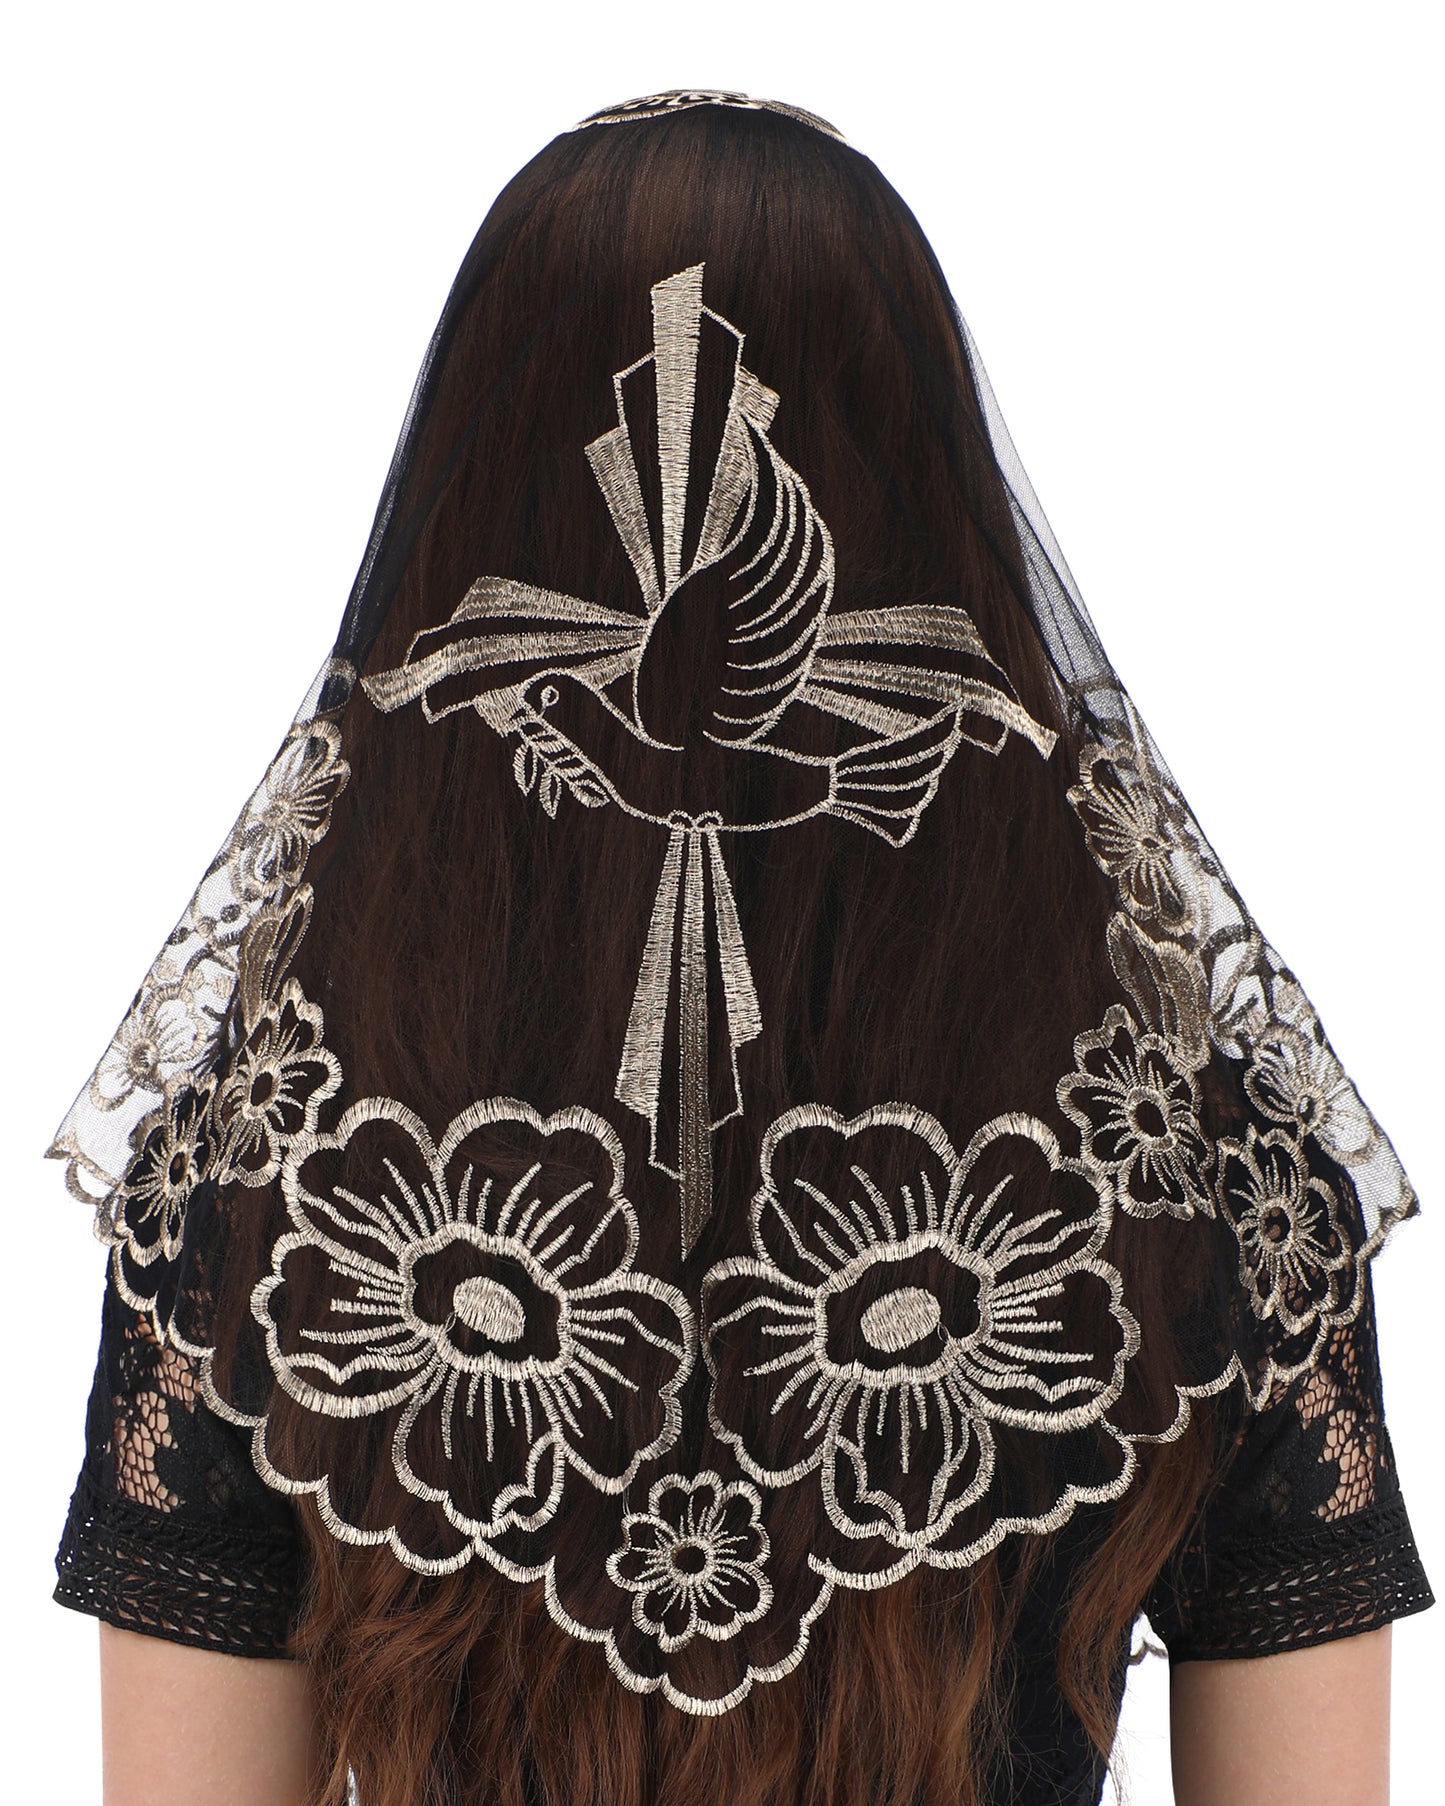 Bozidol Triangle Mantilla Church Veil - Cross Camellia Embroidered Wedding Bridal Veil Accessories